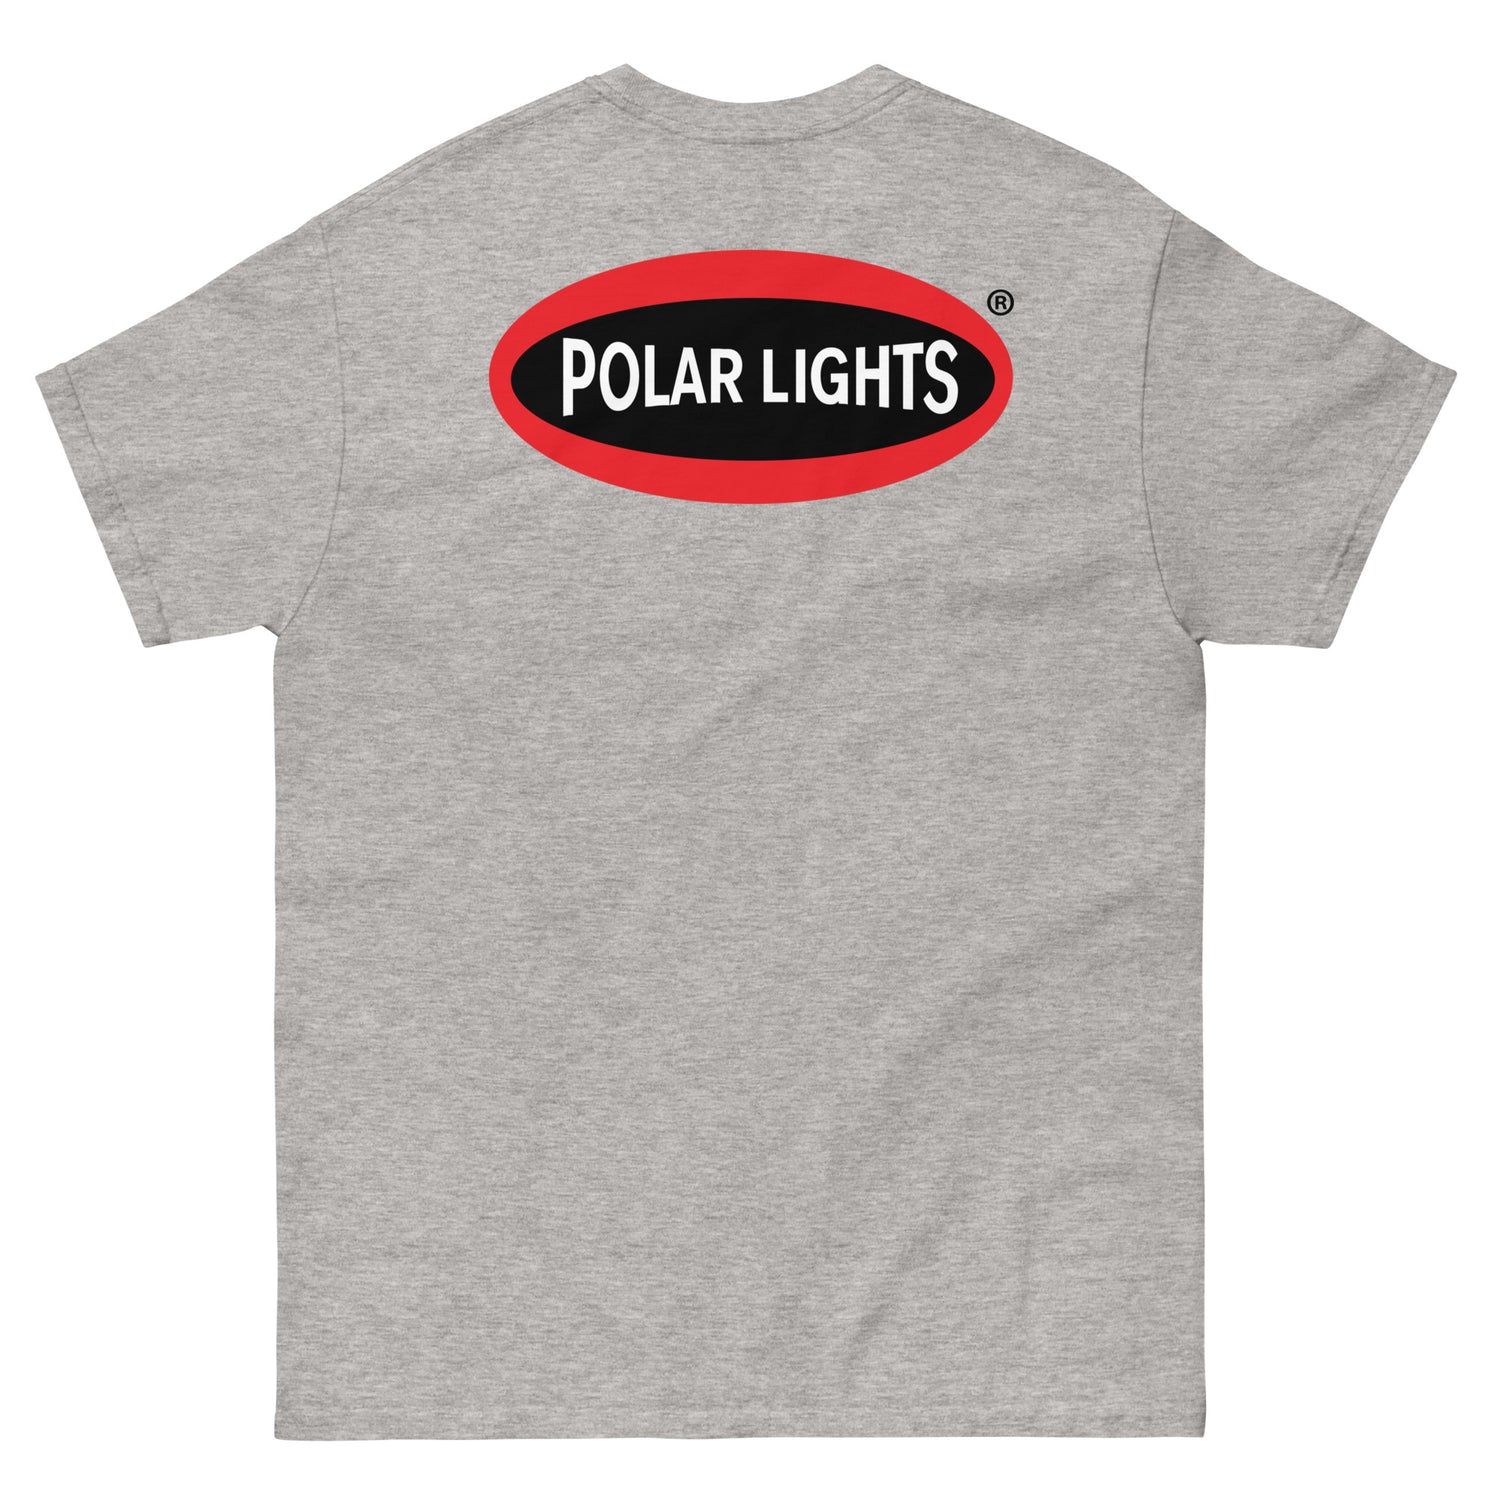 POLAR LIGHTS LOGO PRINTED T-SHIRT (FRONT AND BACK)